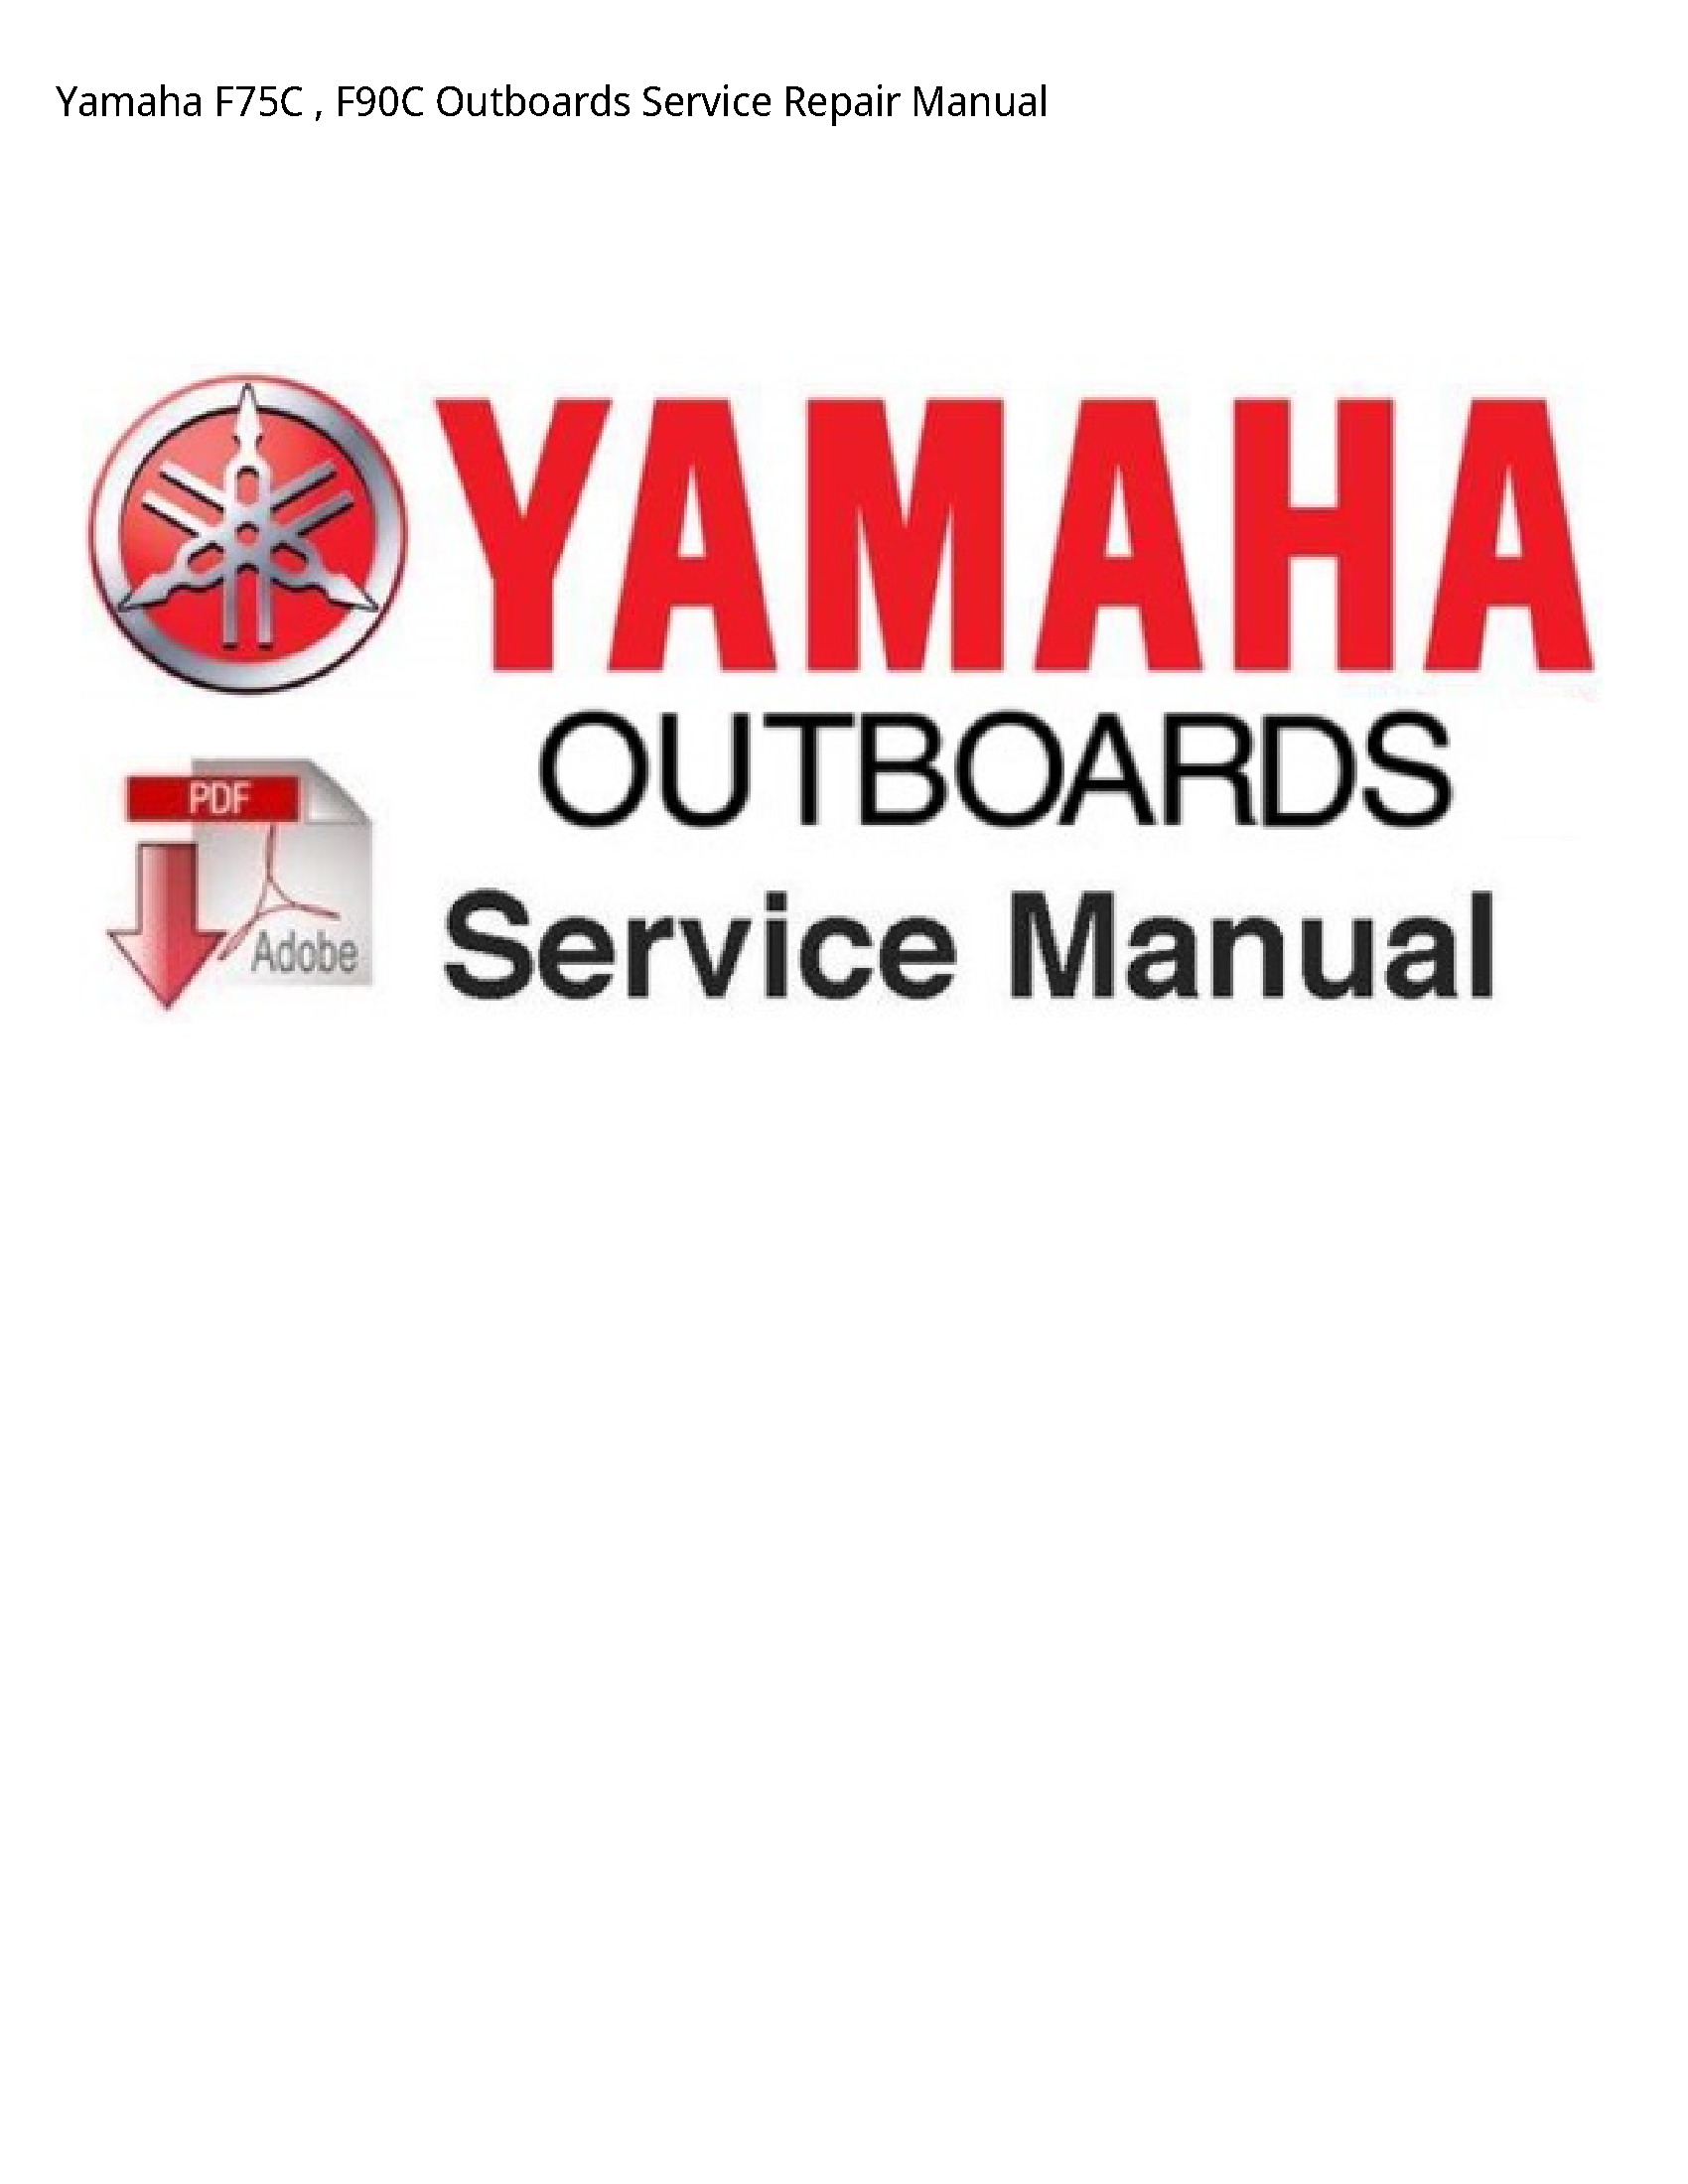 Yamaha F75C Outboards manual